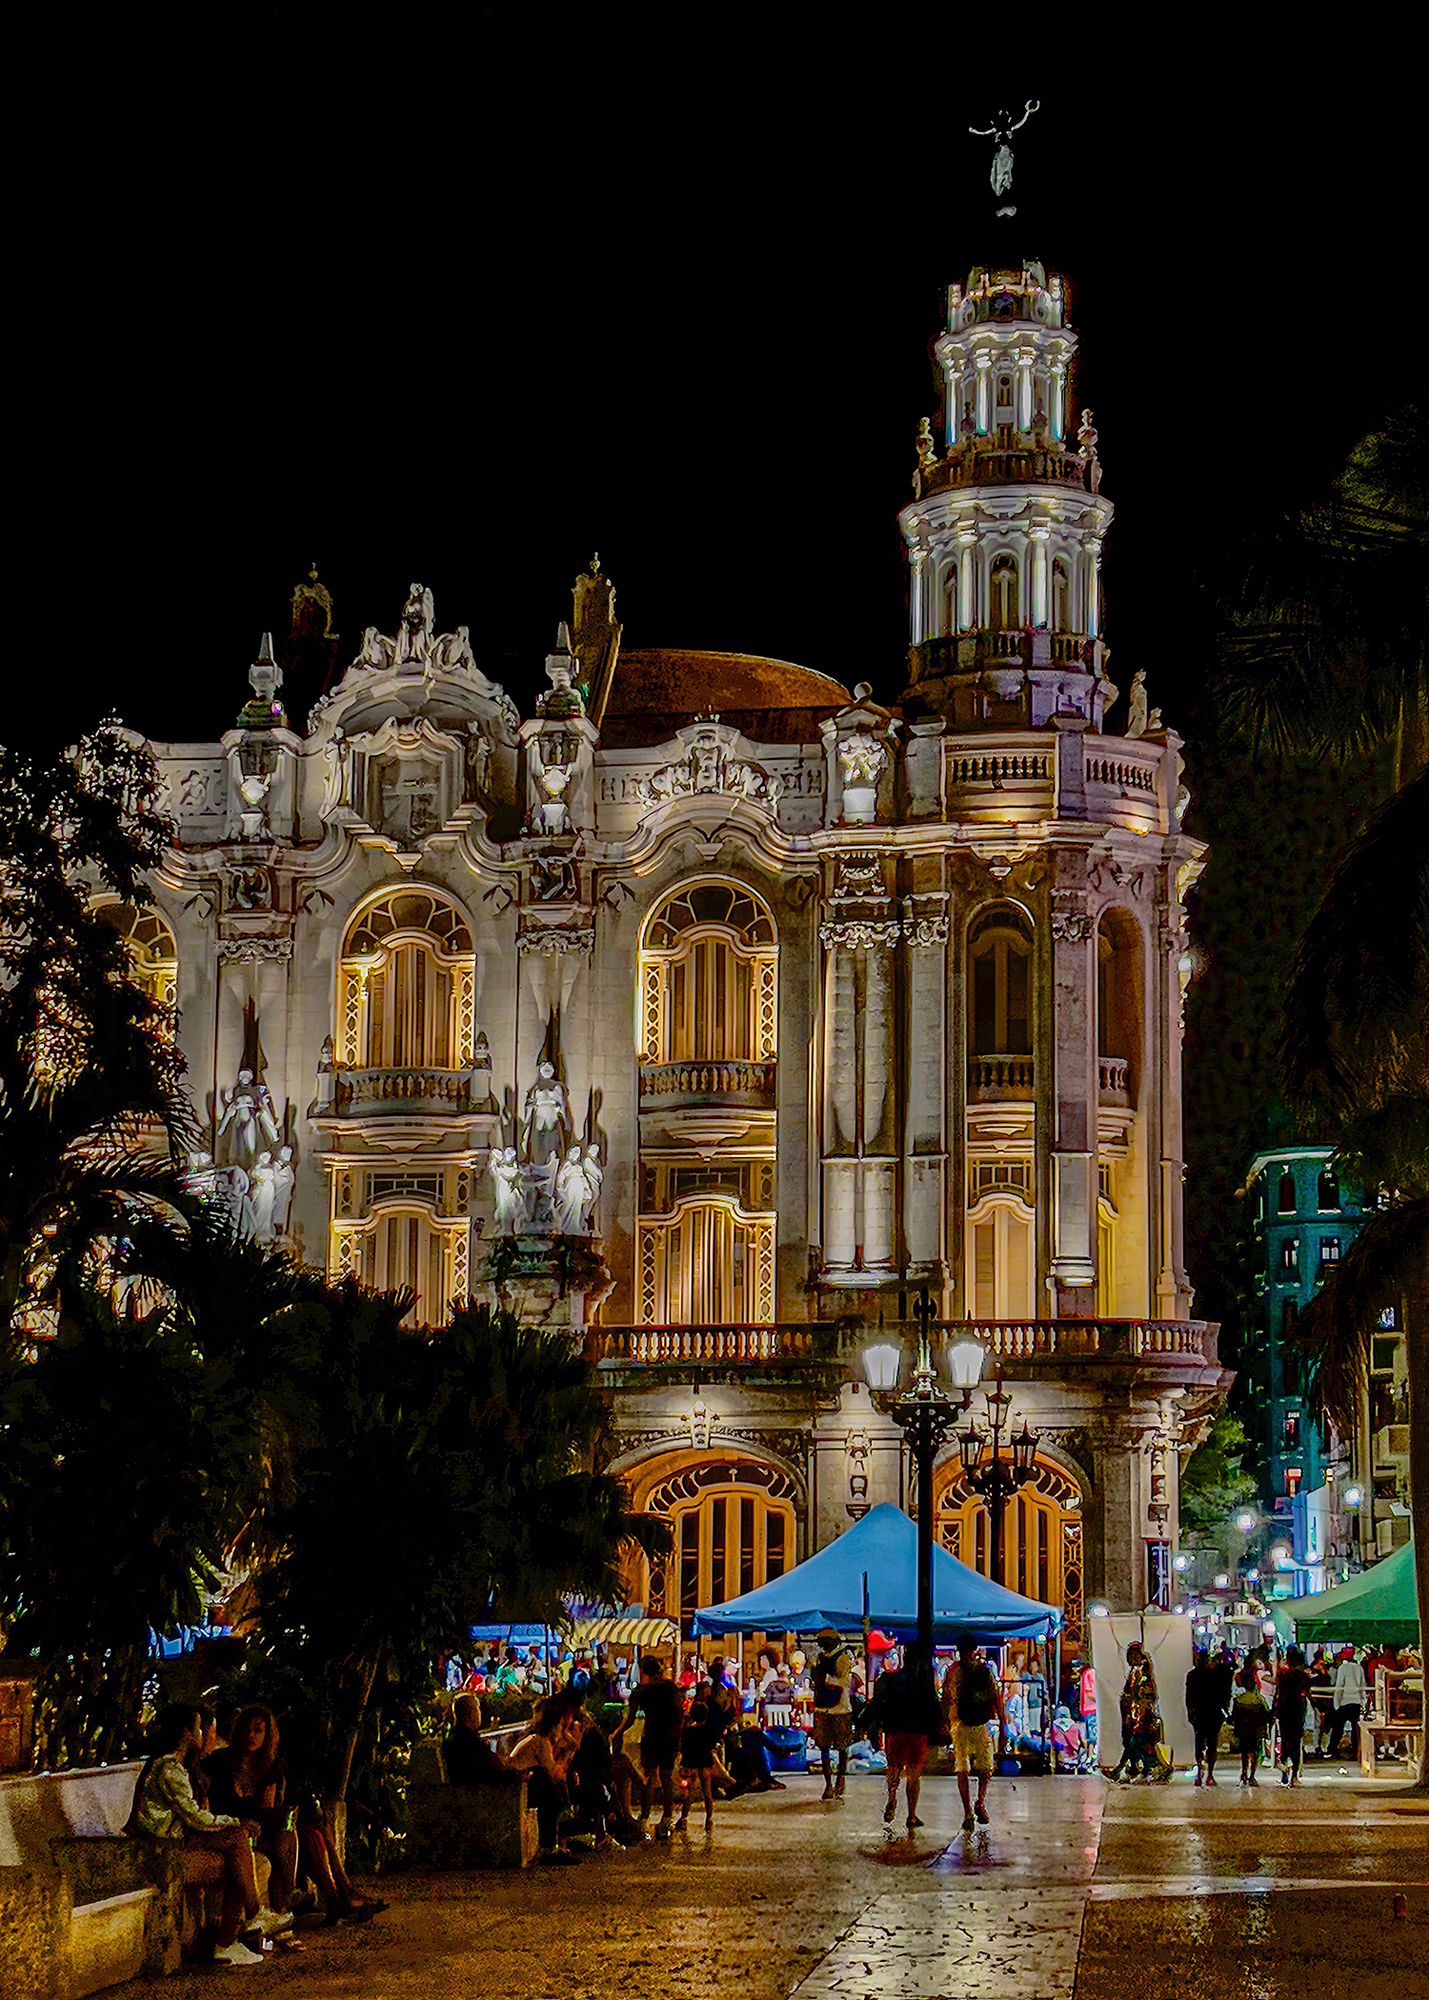 iPhone 12 Pro Max, Night Mode; Alicia Alonso Grand Theater, Havana